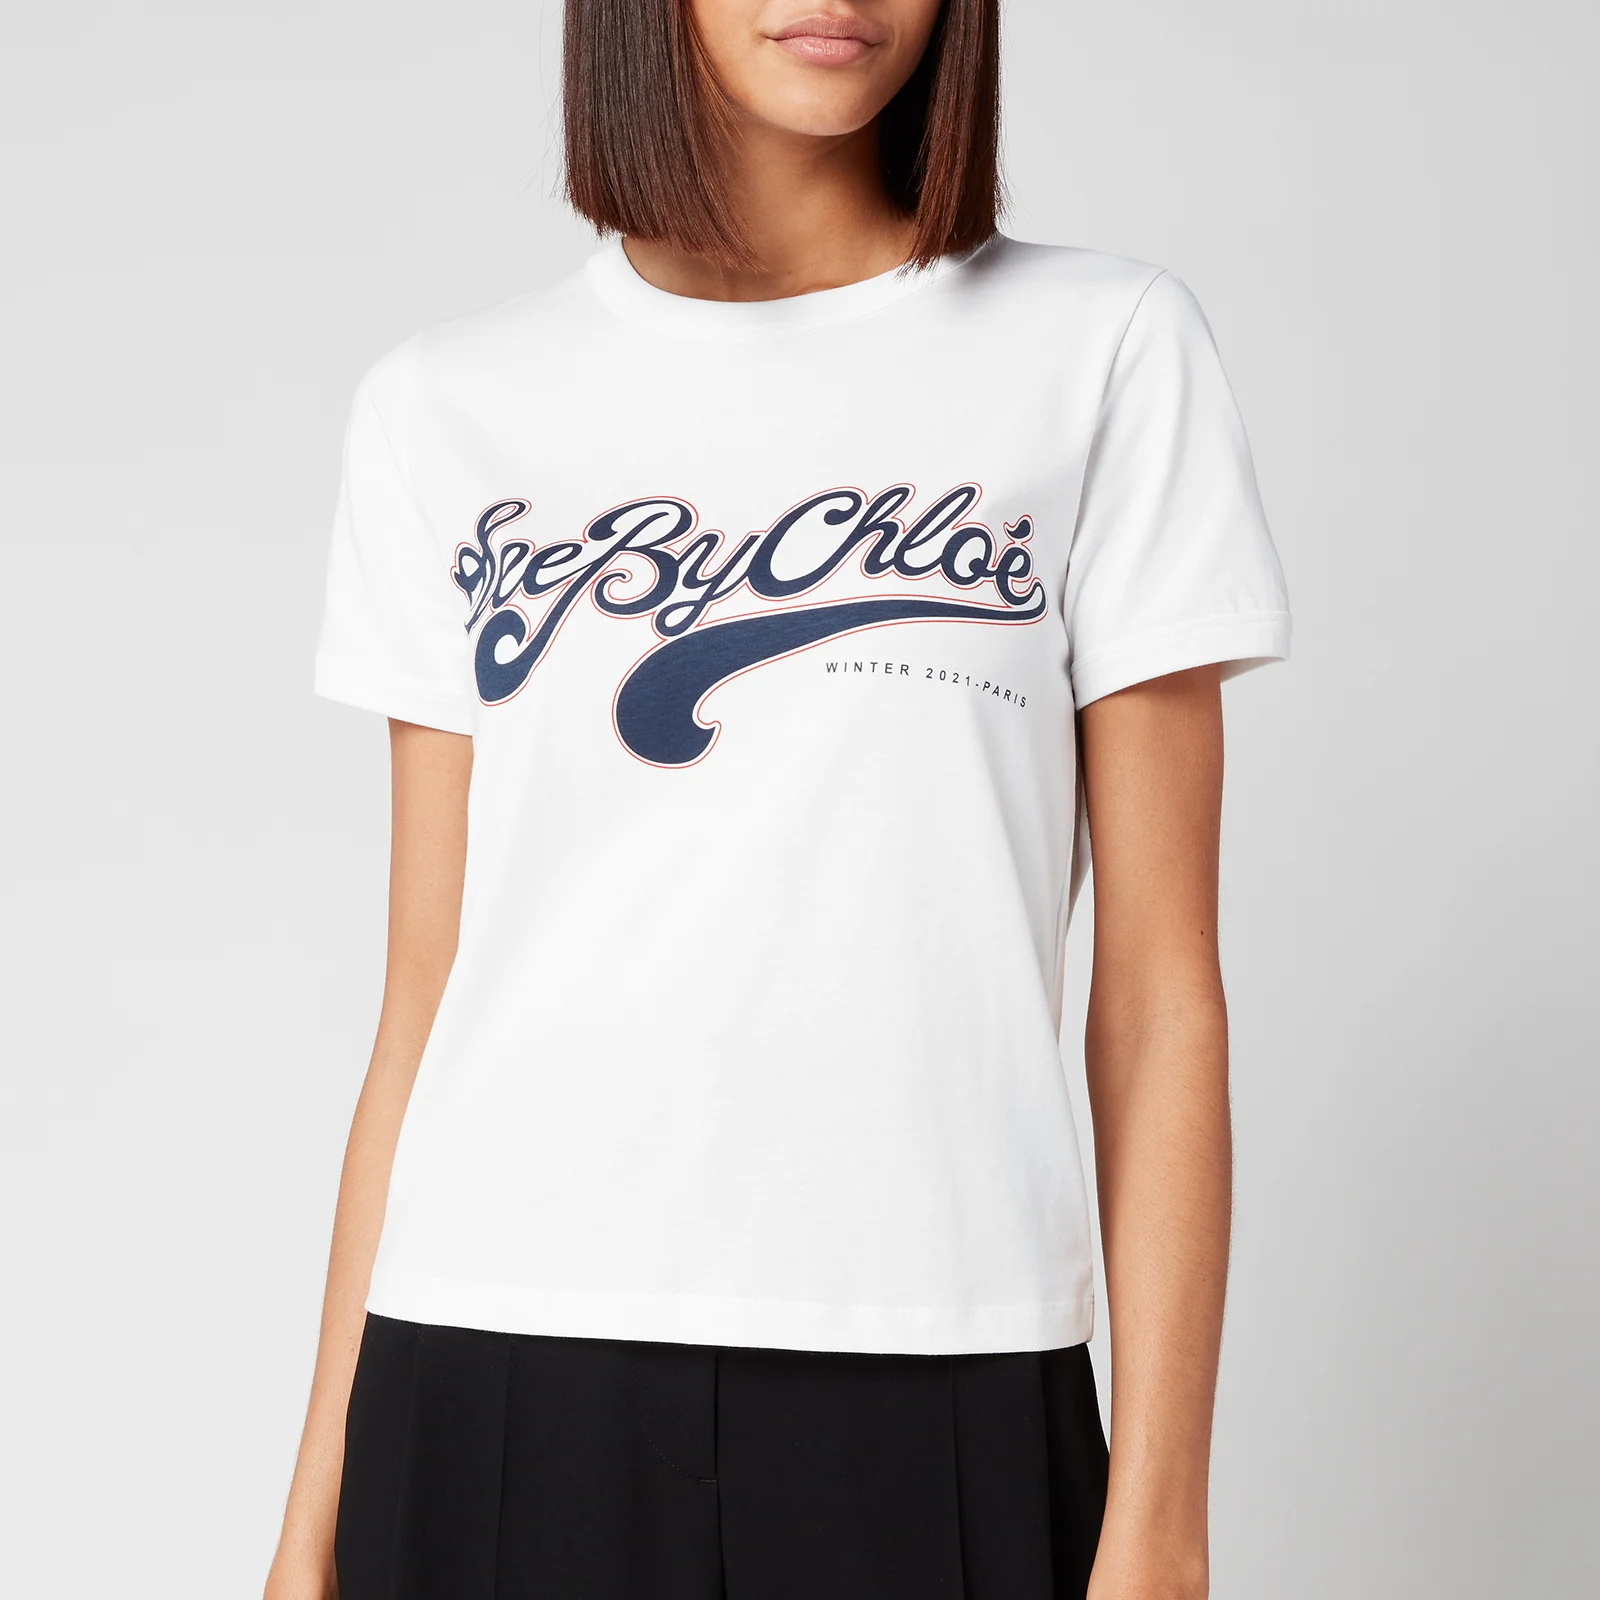 See By Chloé Women's Logo T-Shirt - White Image 1